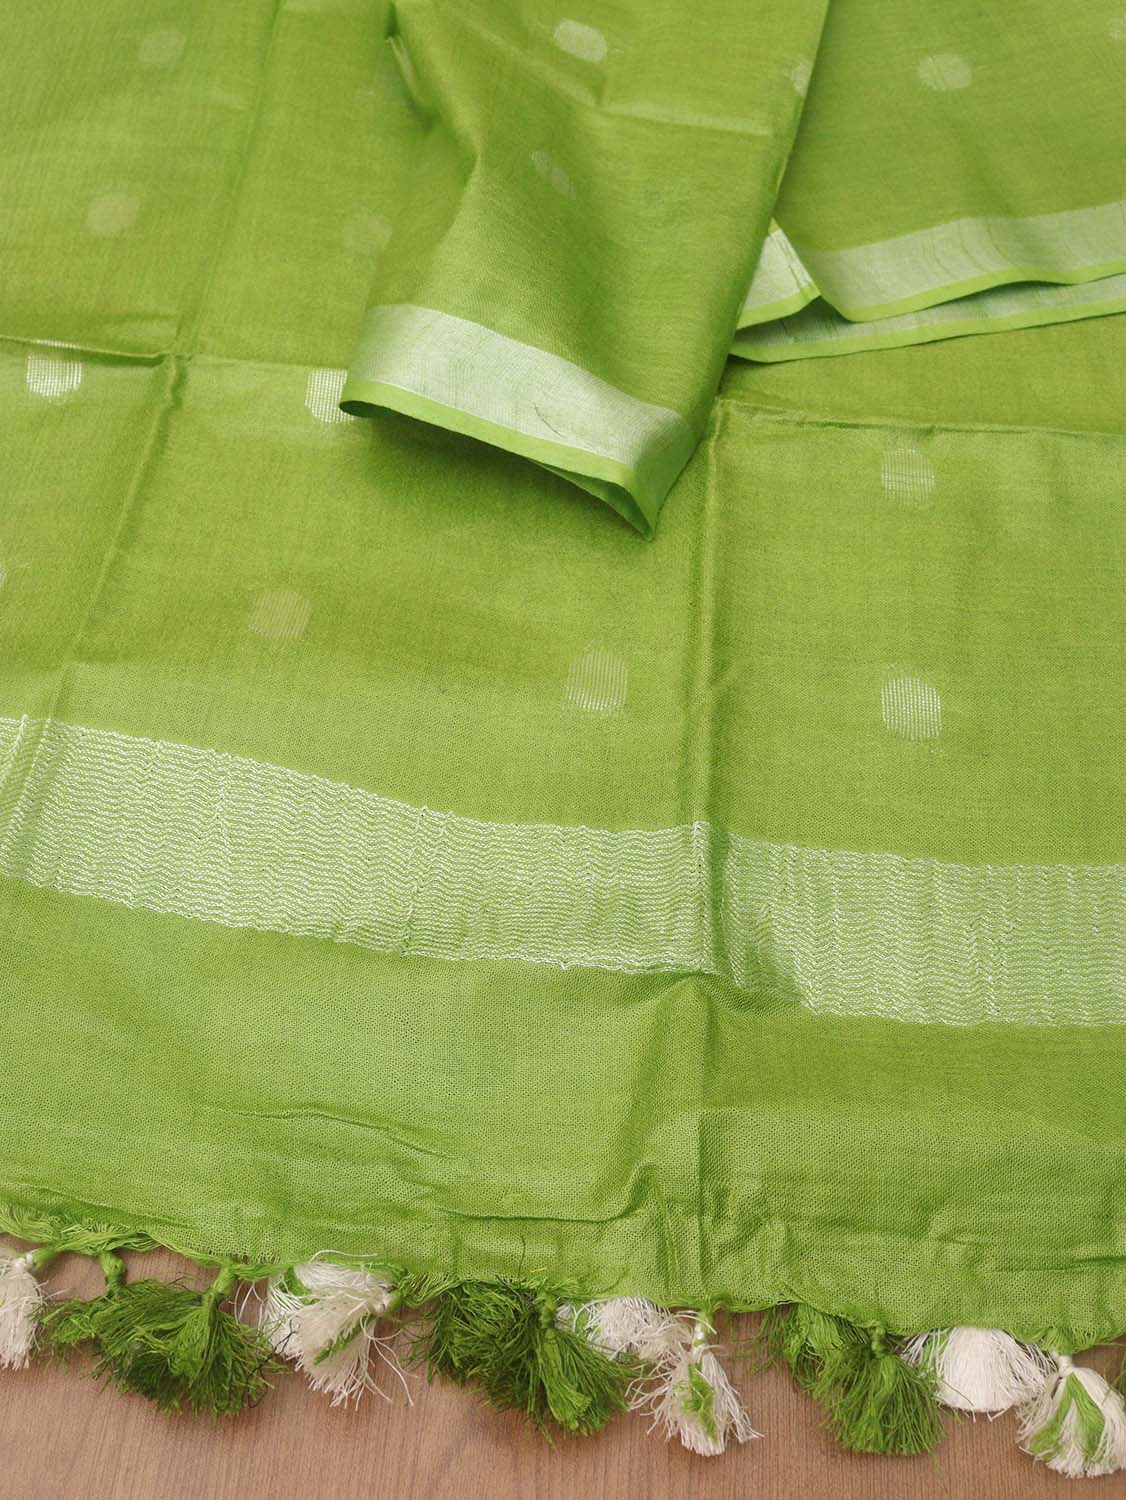 Green Bhagalpur Handloom Linen Cotton Dupatta - Luxurion World